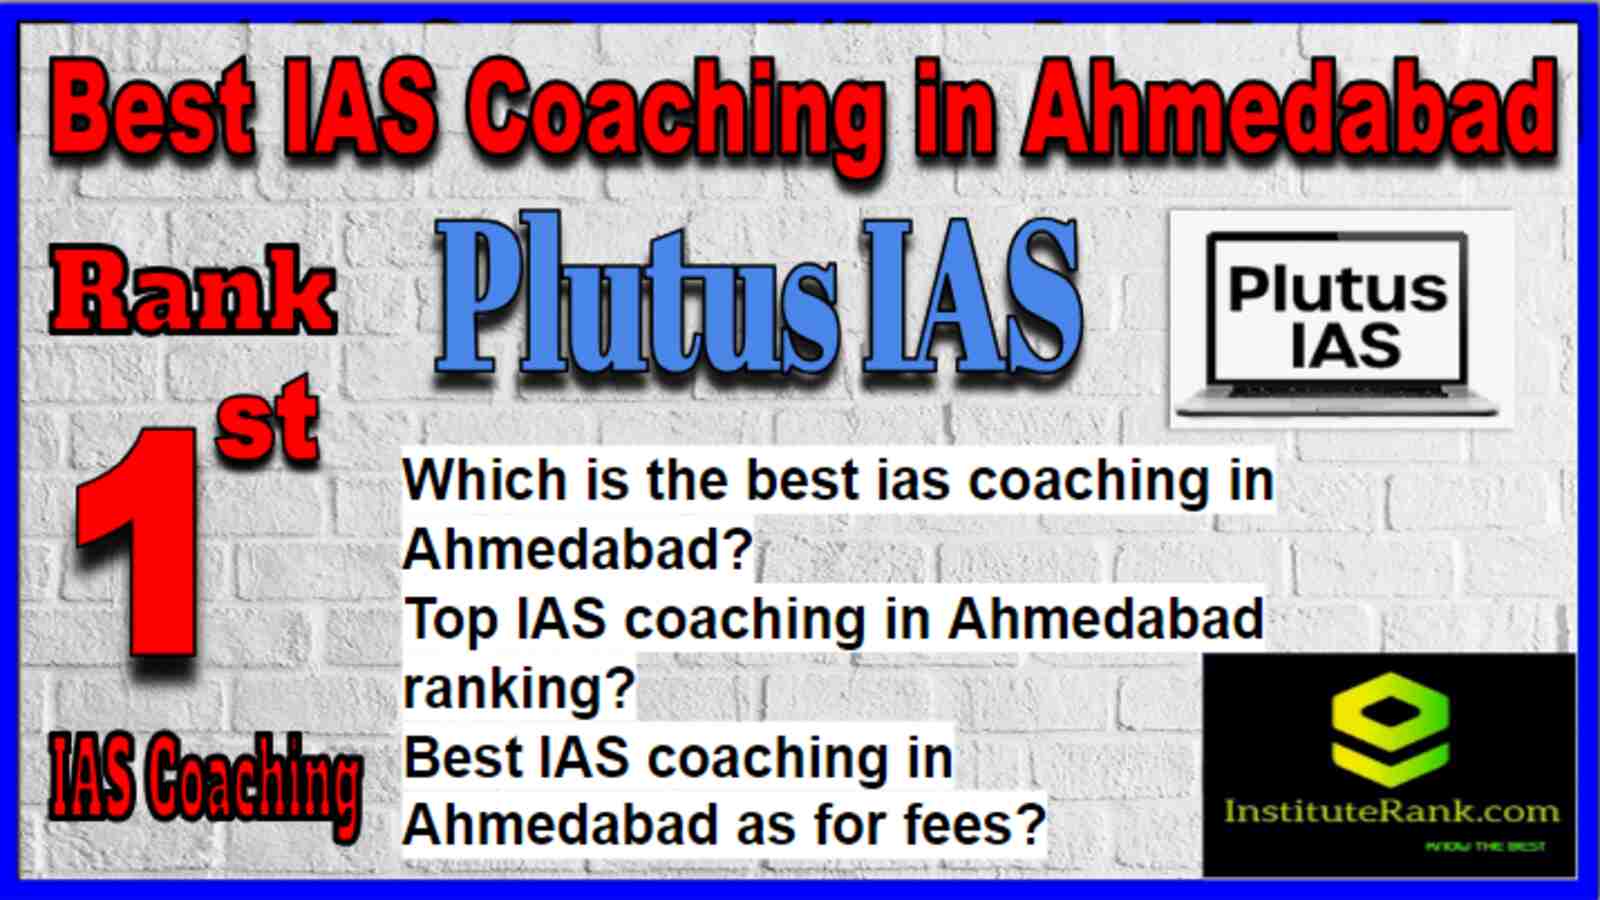 Rank 1 Best IAS Coaching in Ahmedabad